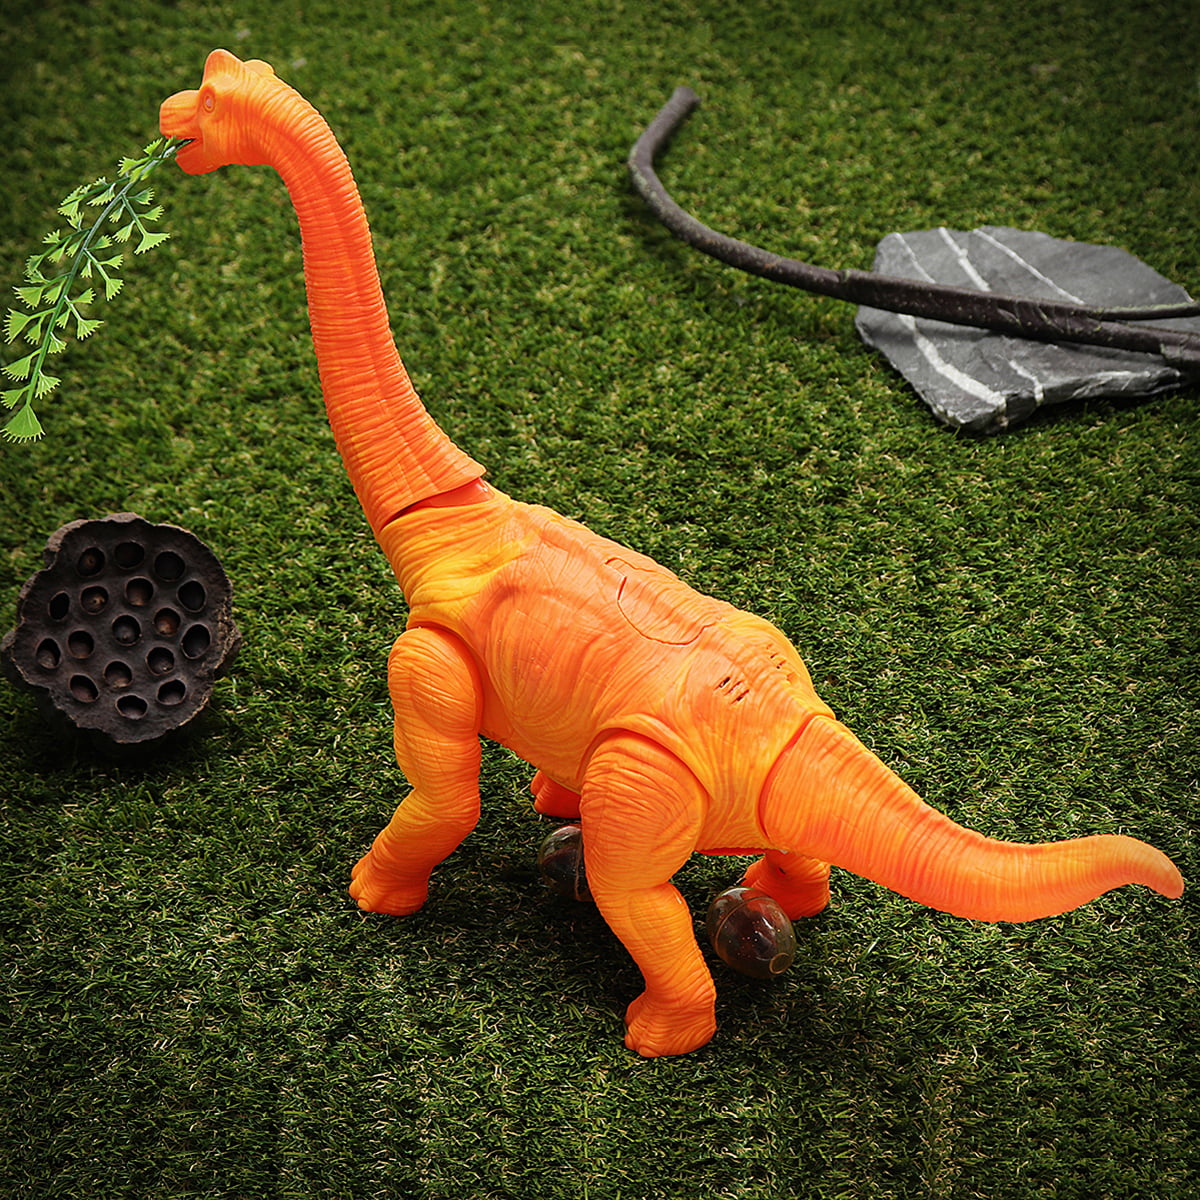 Egg Laying Walking Brachiosaurus Dinosaur T-REX Toy Lights Box HOT